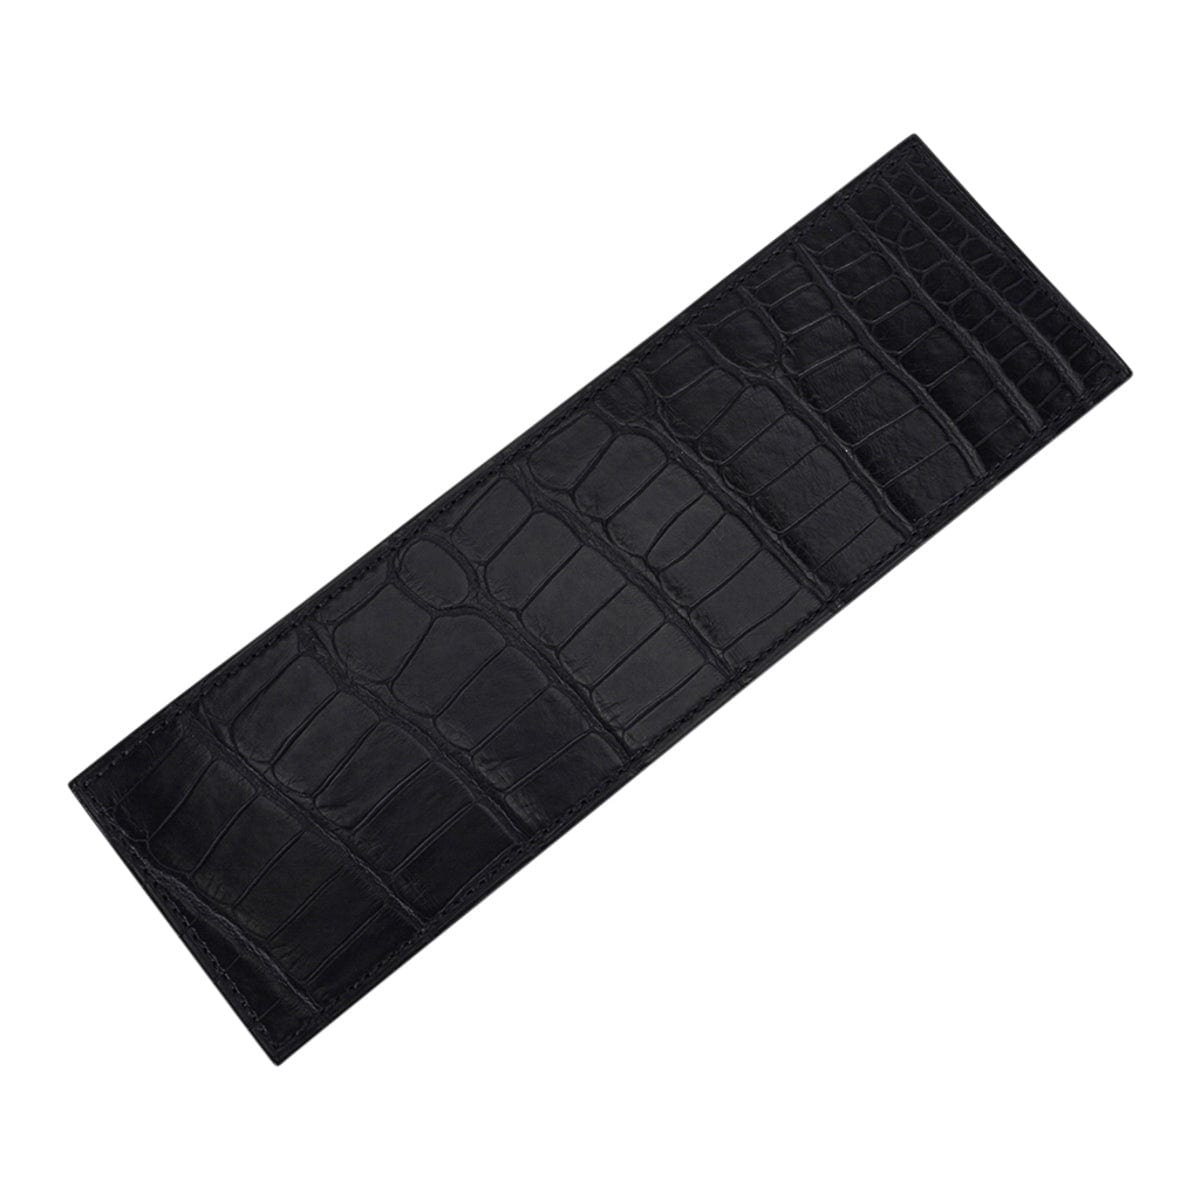 Kelly danse leather crossbody bag Hermès Black in Leather - 37909515